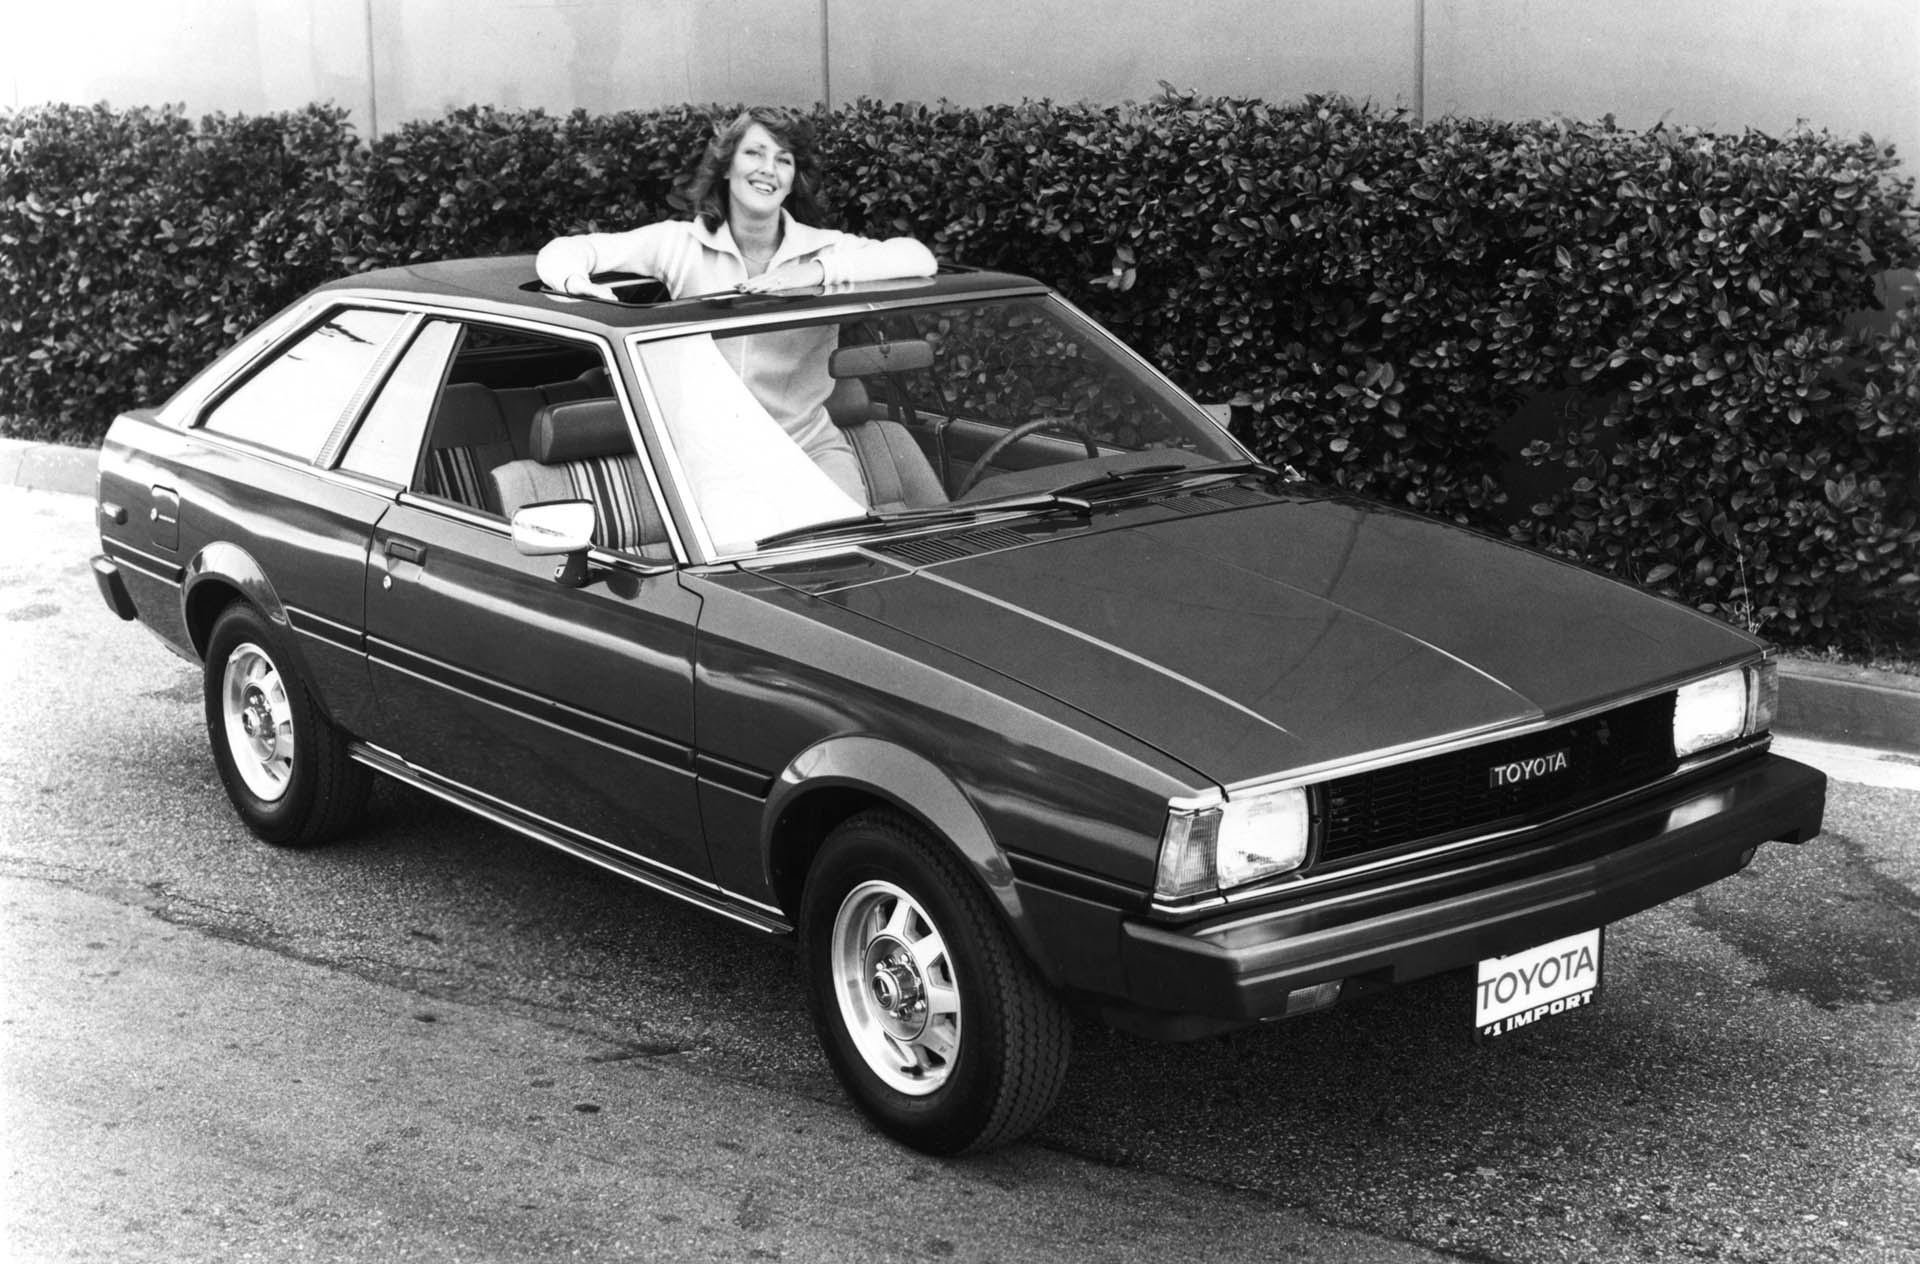 USA - The 4th Generation Corolla (1980 - 1983)